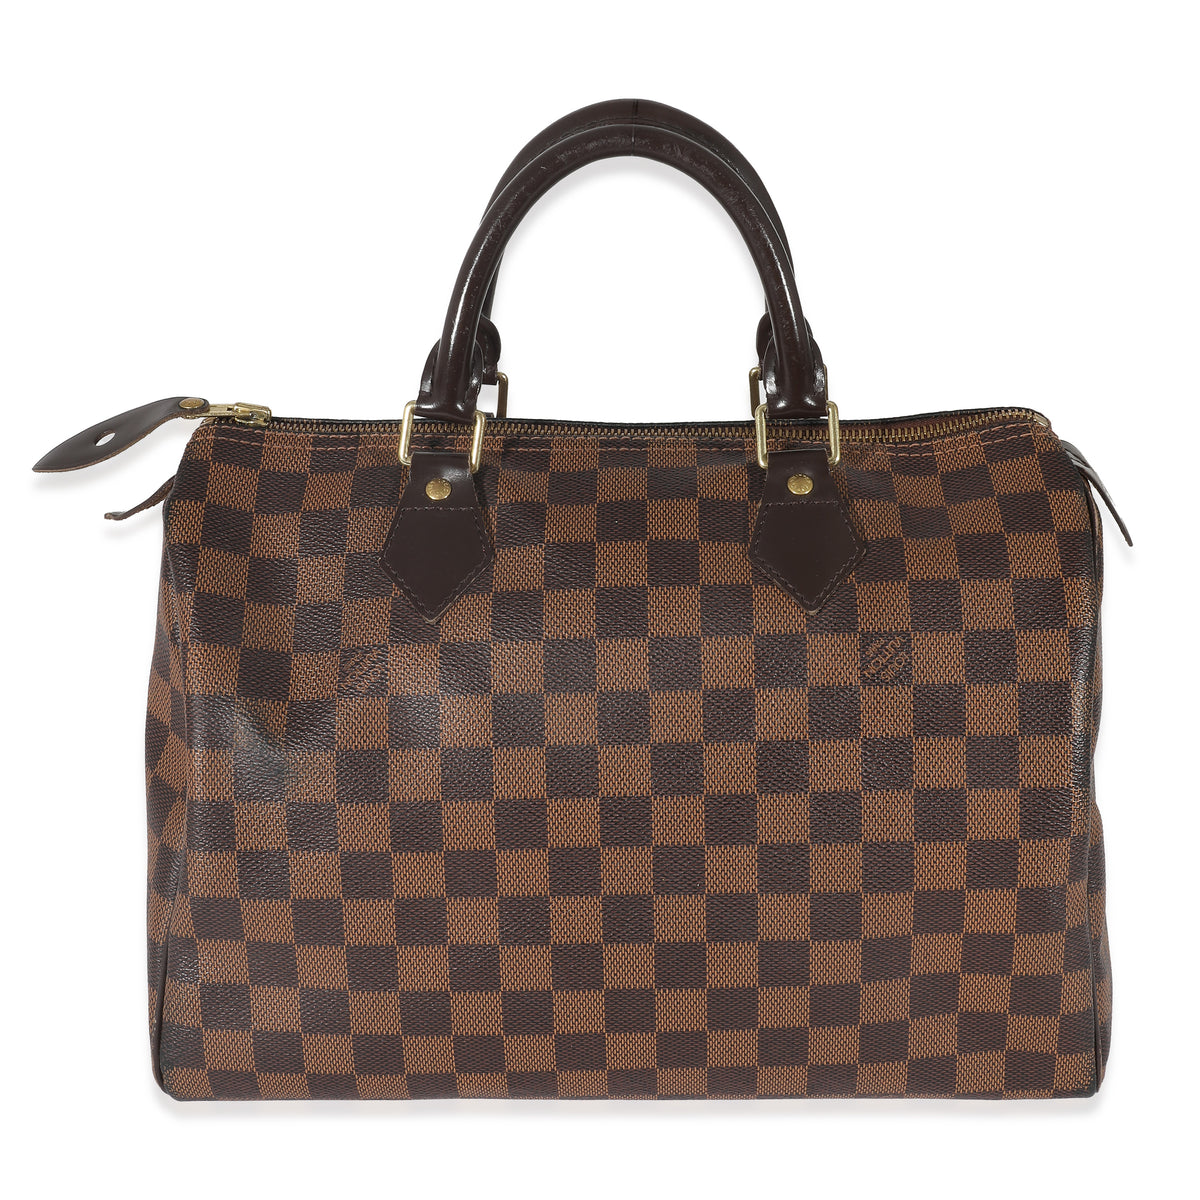 Louis Vuitton Speedy 30 Damier Bag